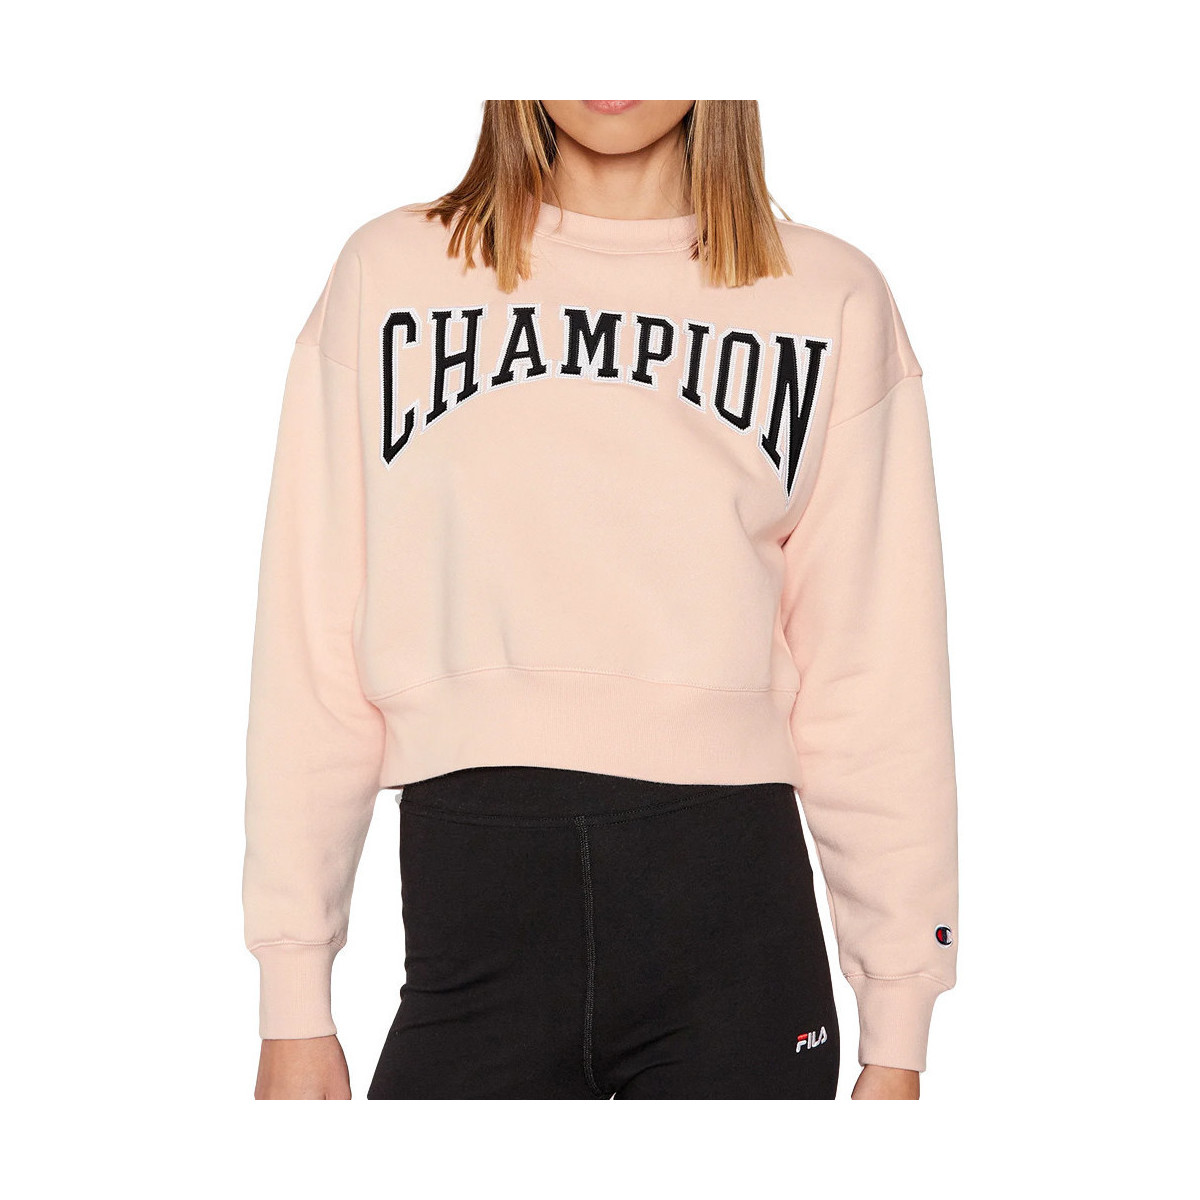 Textiel Dames Sweaters / Sweatshirts Champion  Roze